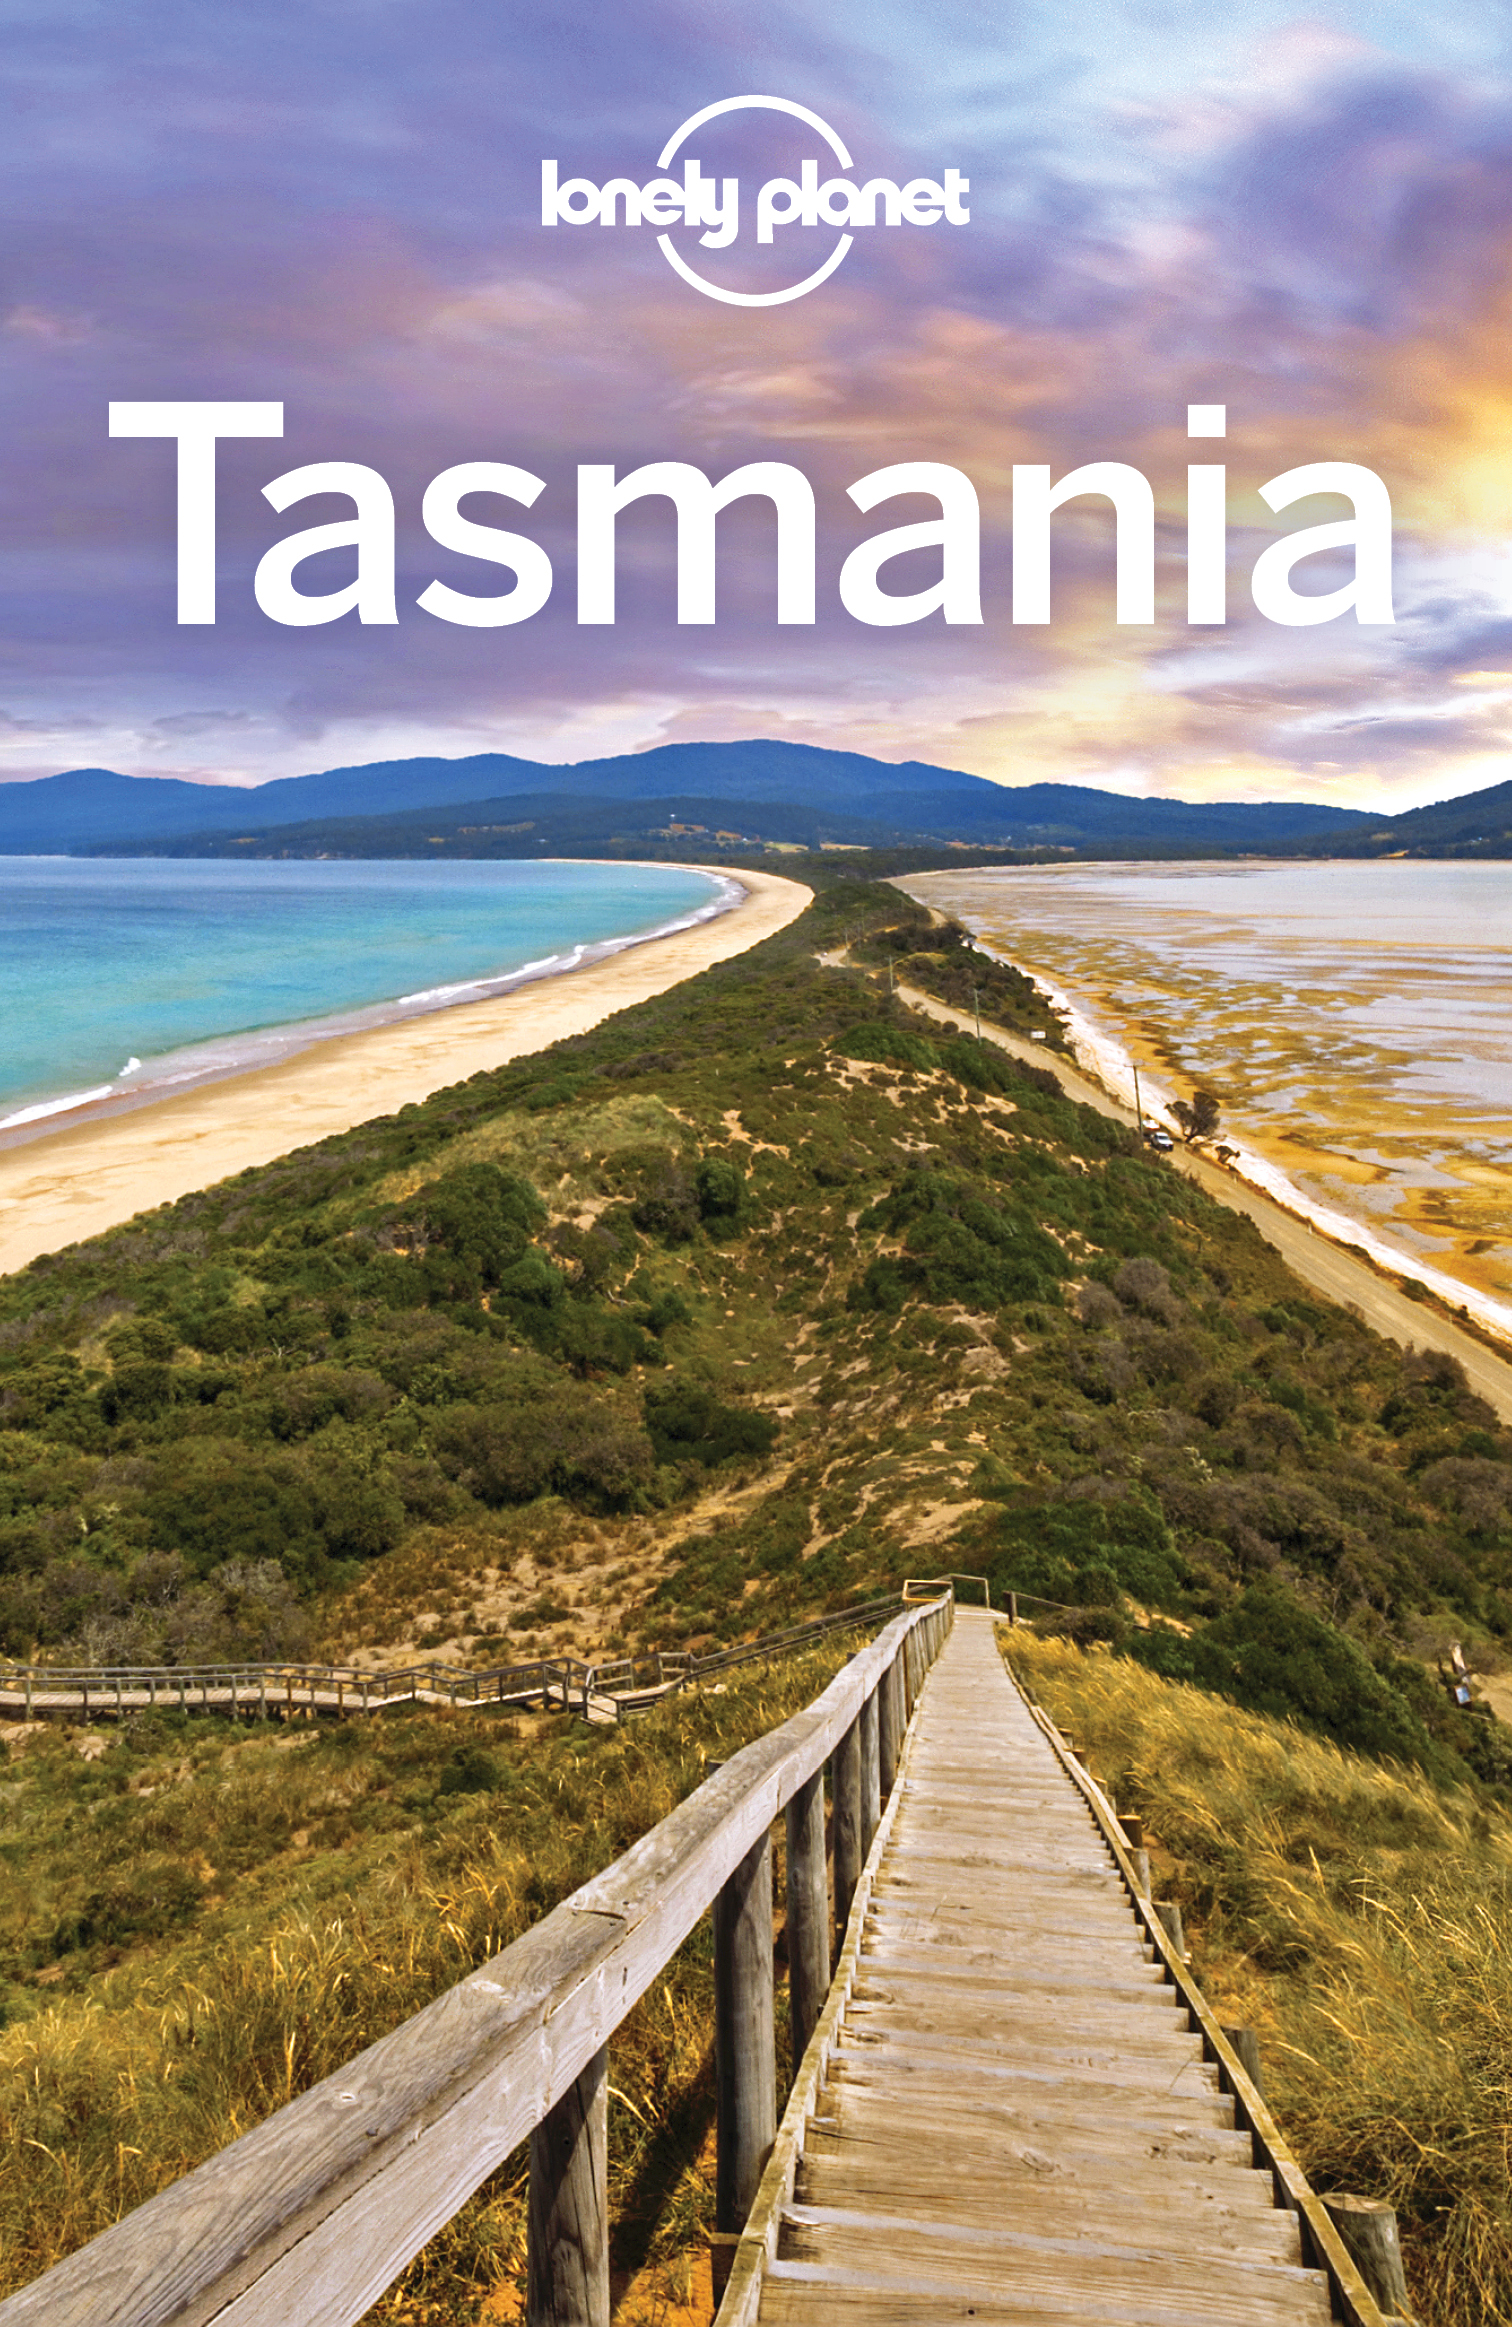 Lonely Planet Tasmania - image 1